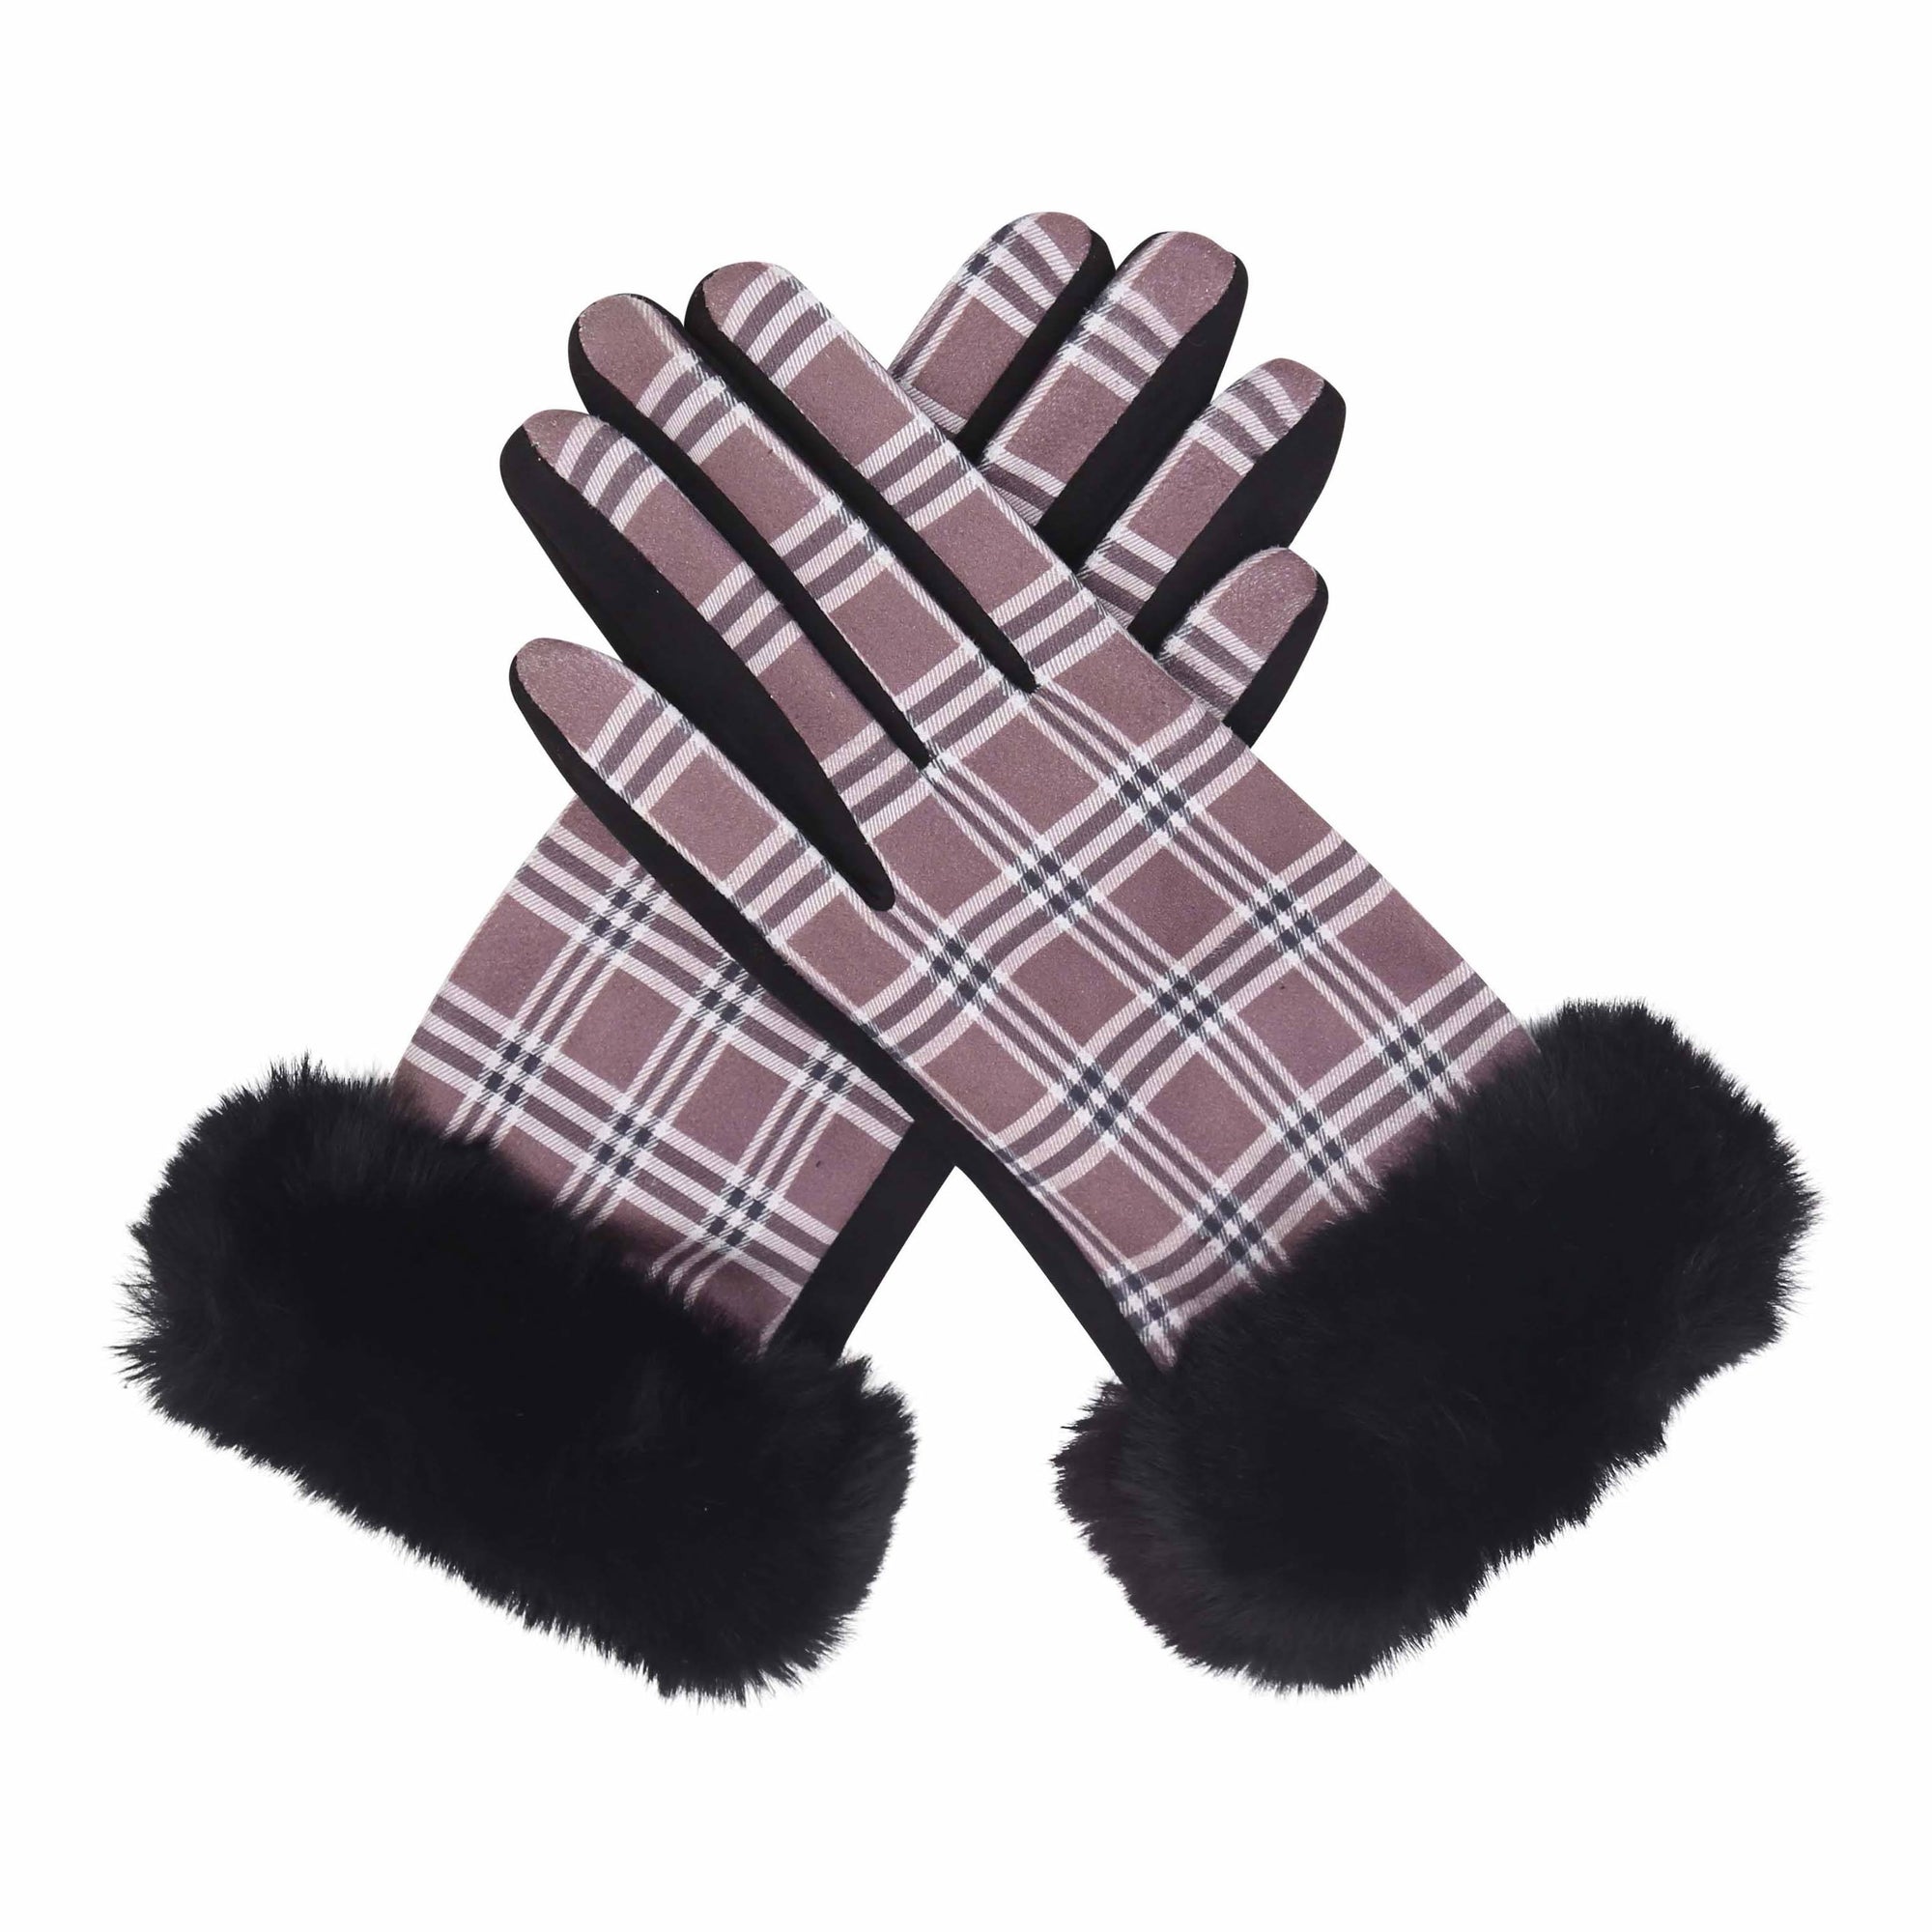 Pair of black, brown and white tartan plaid texting gloves with black fake fur cuffs